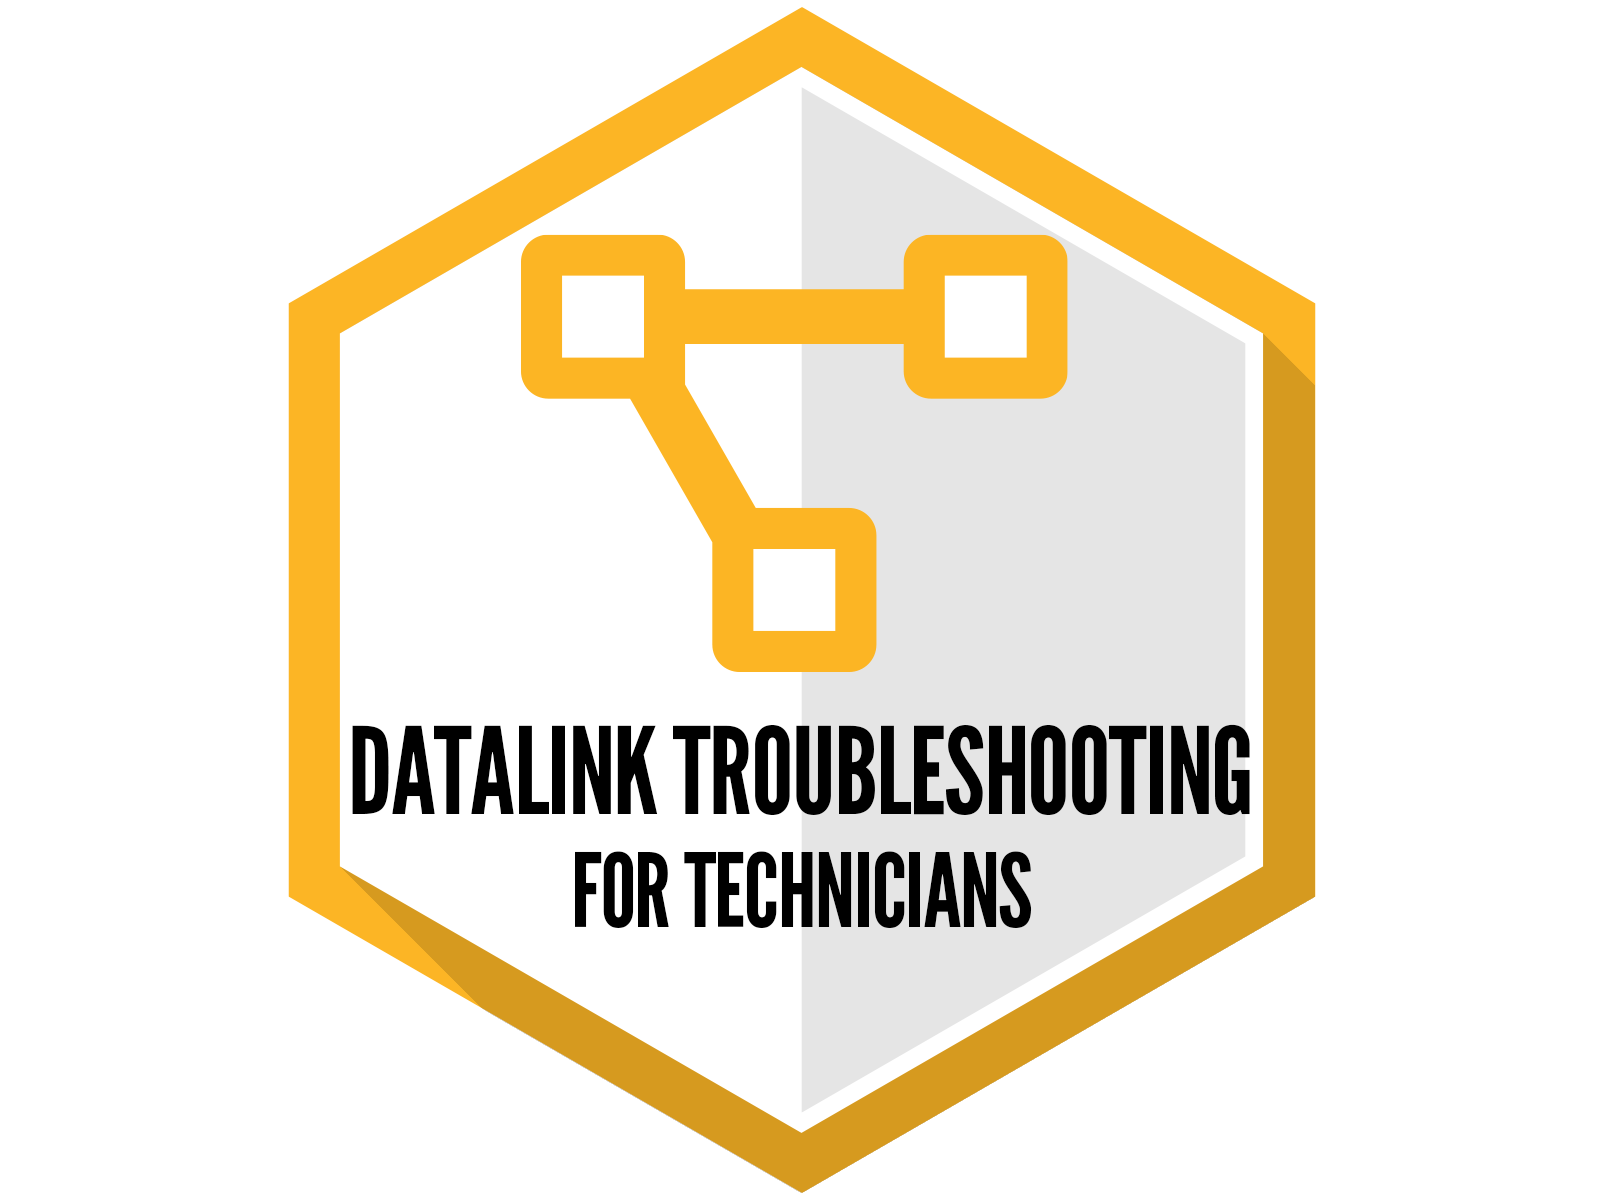 Datalink "J1939/J1708" Troubleshooting for Technicians - Dallas, TX